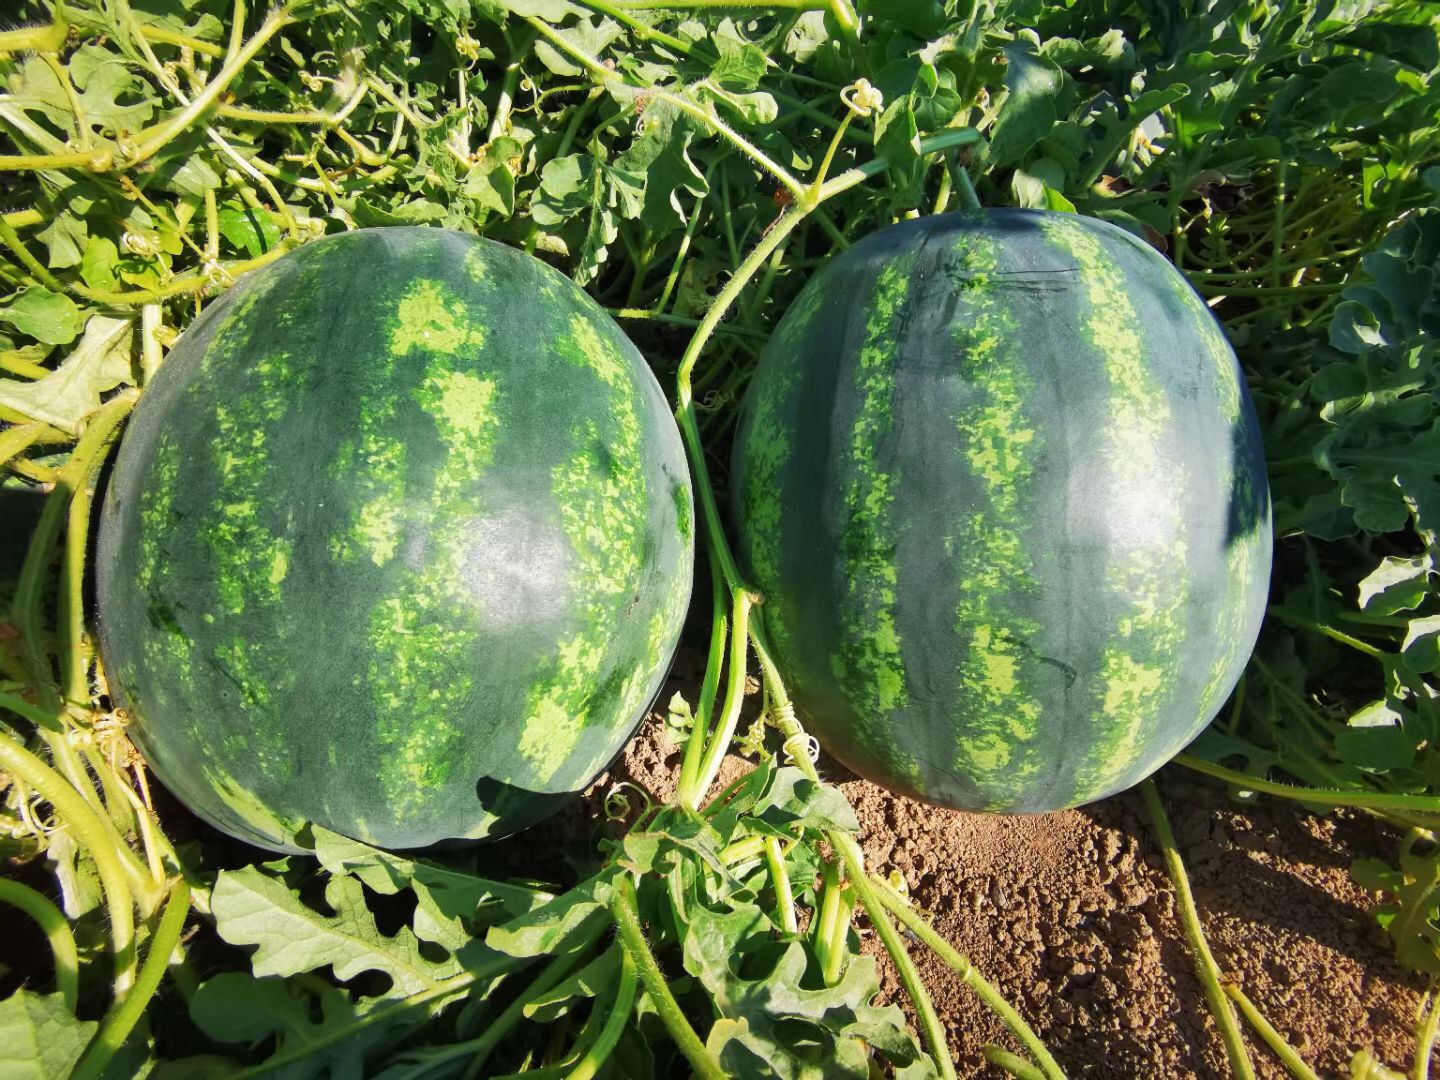 Suntoday crimson sweet 8-15kgs watermelon seeds(11034)